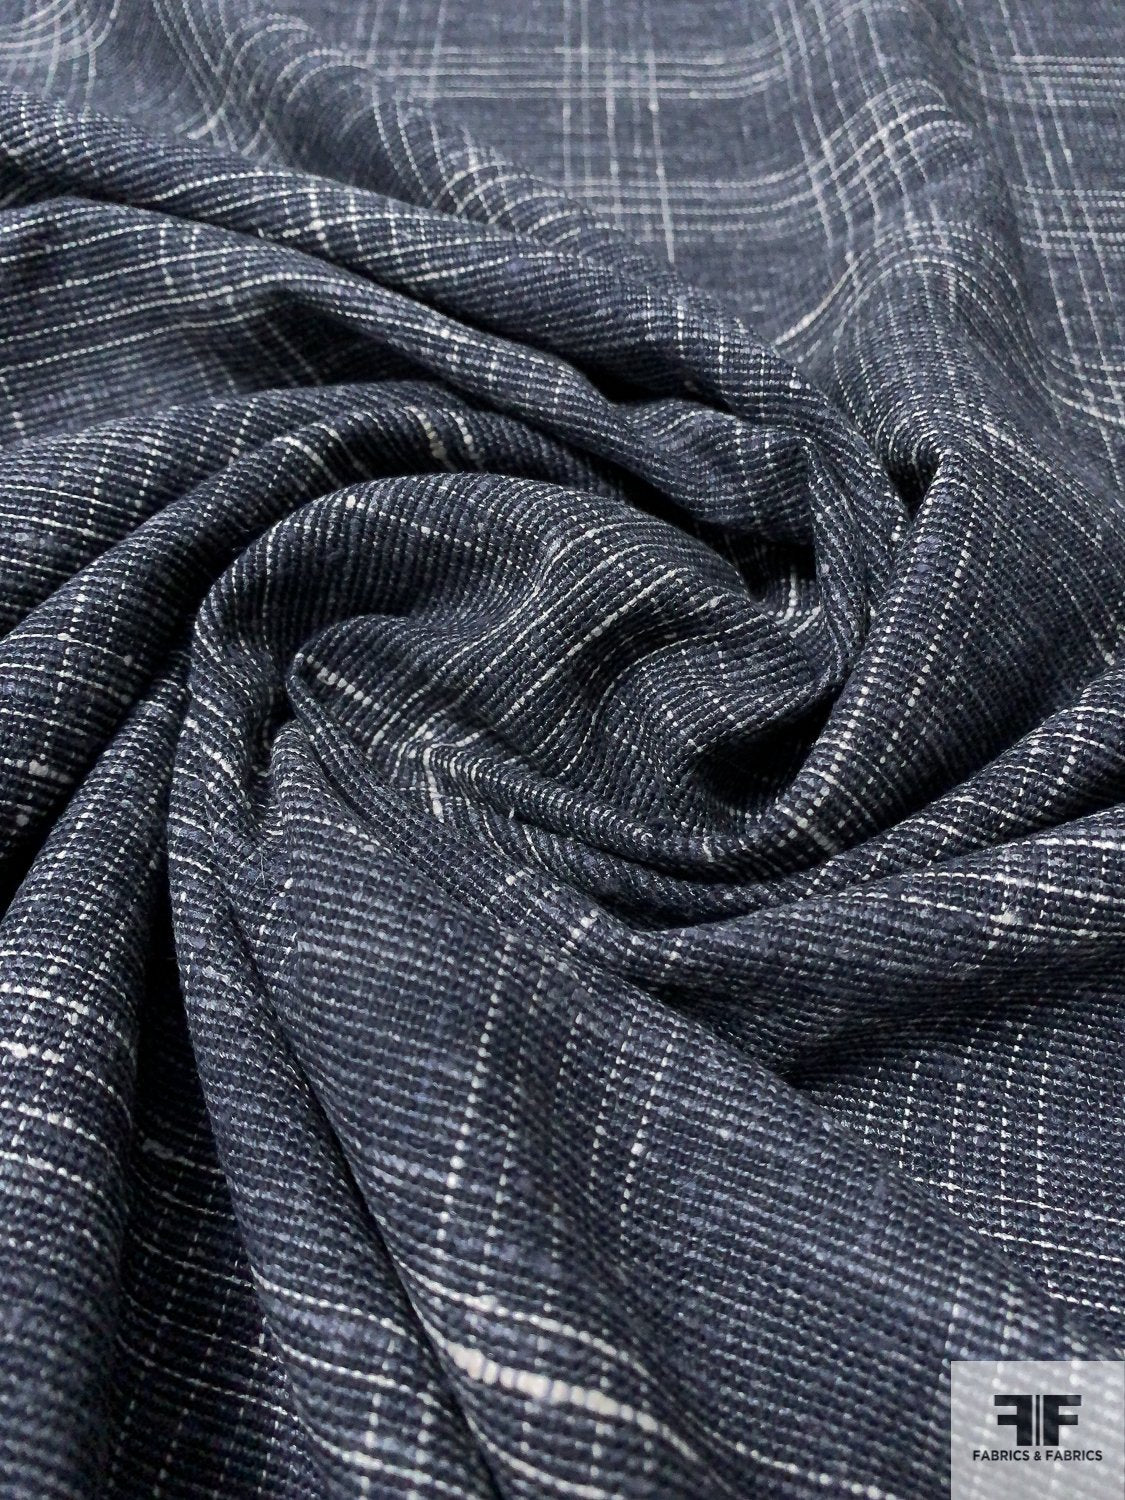 Italian Glen Check Plaid Cotton Linen - Grey / Black / Off-White